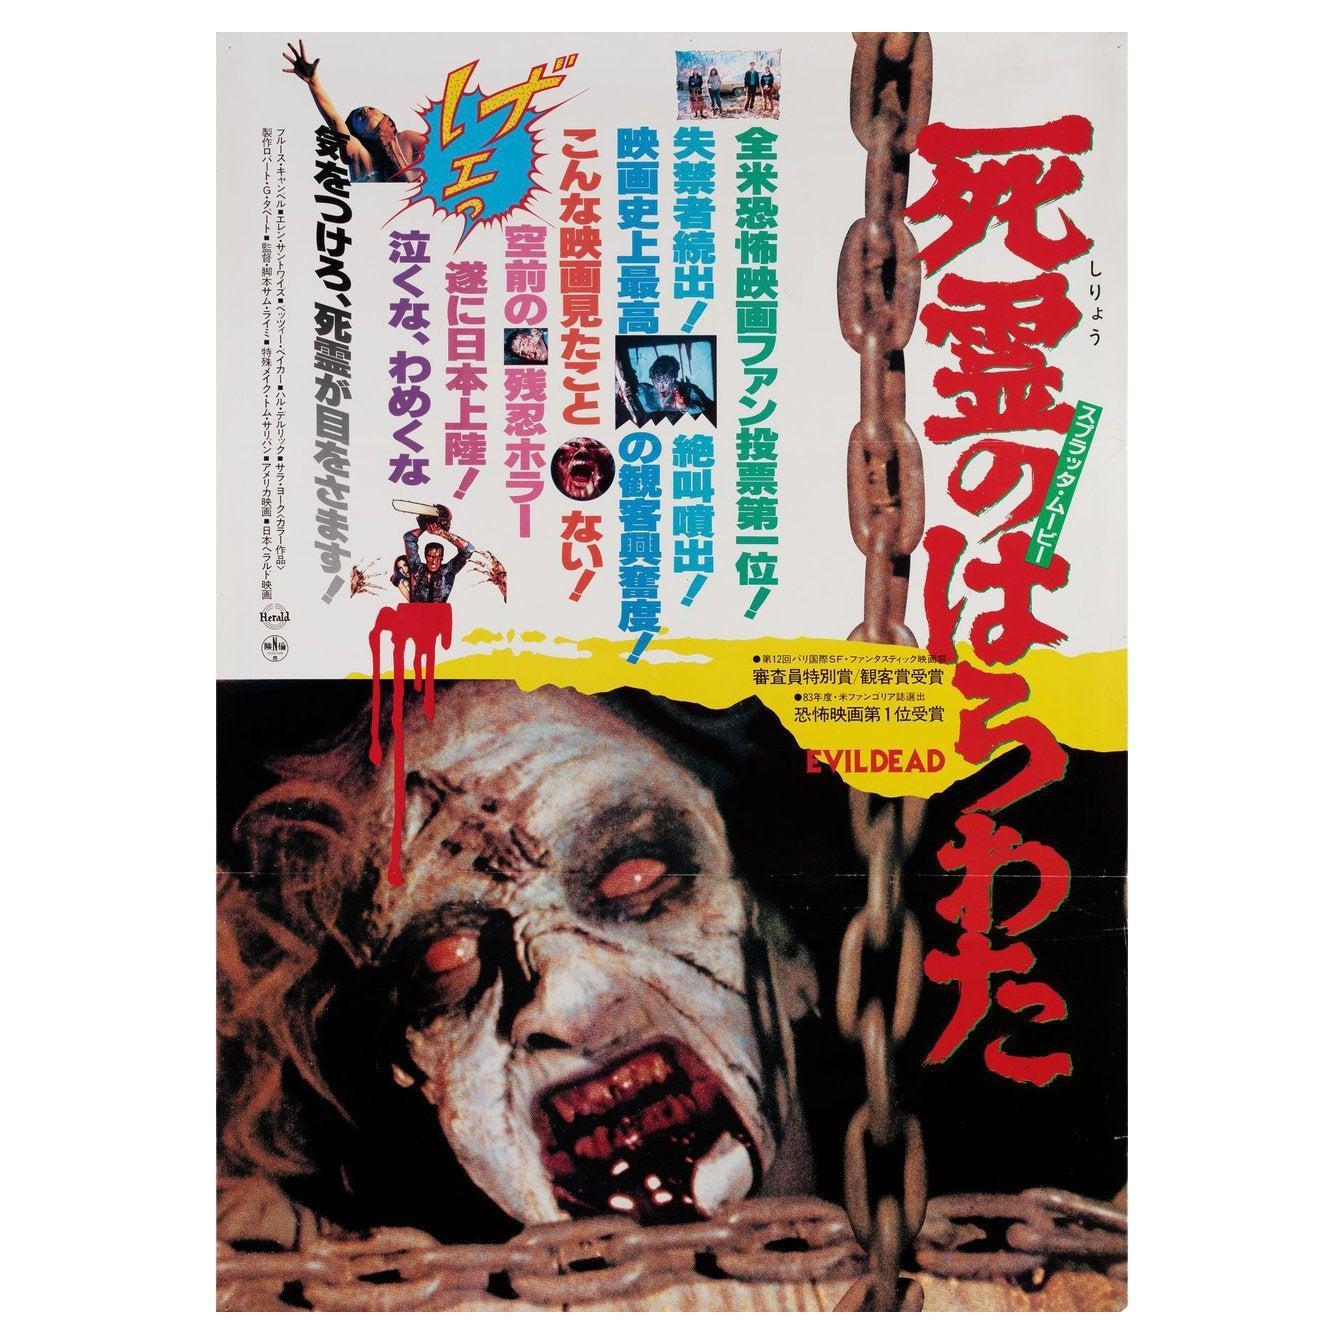 „The Evil Dead“, japanisches B2-Filmplakat, 1984